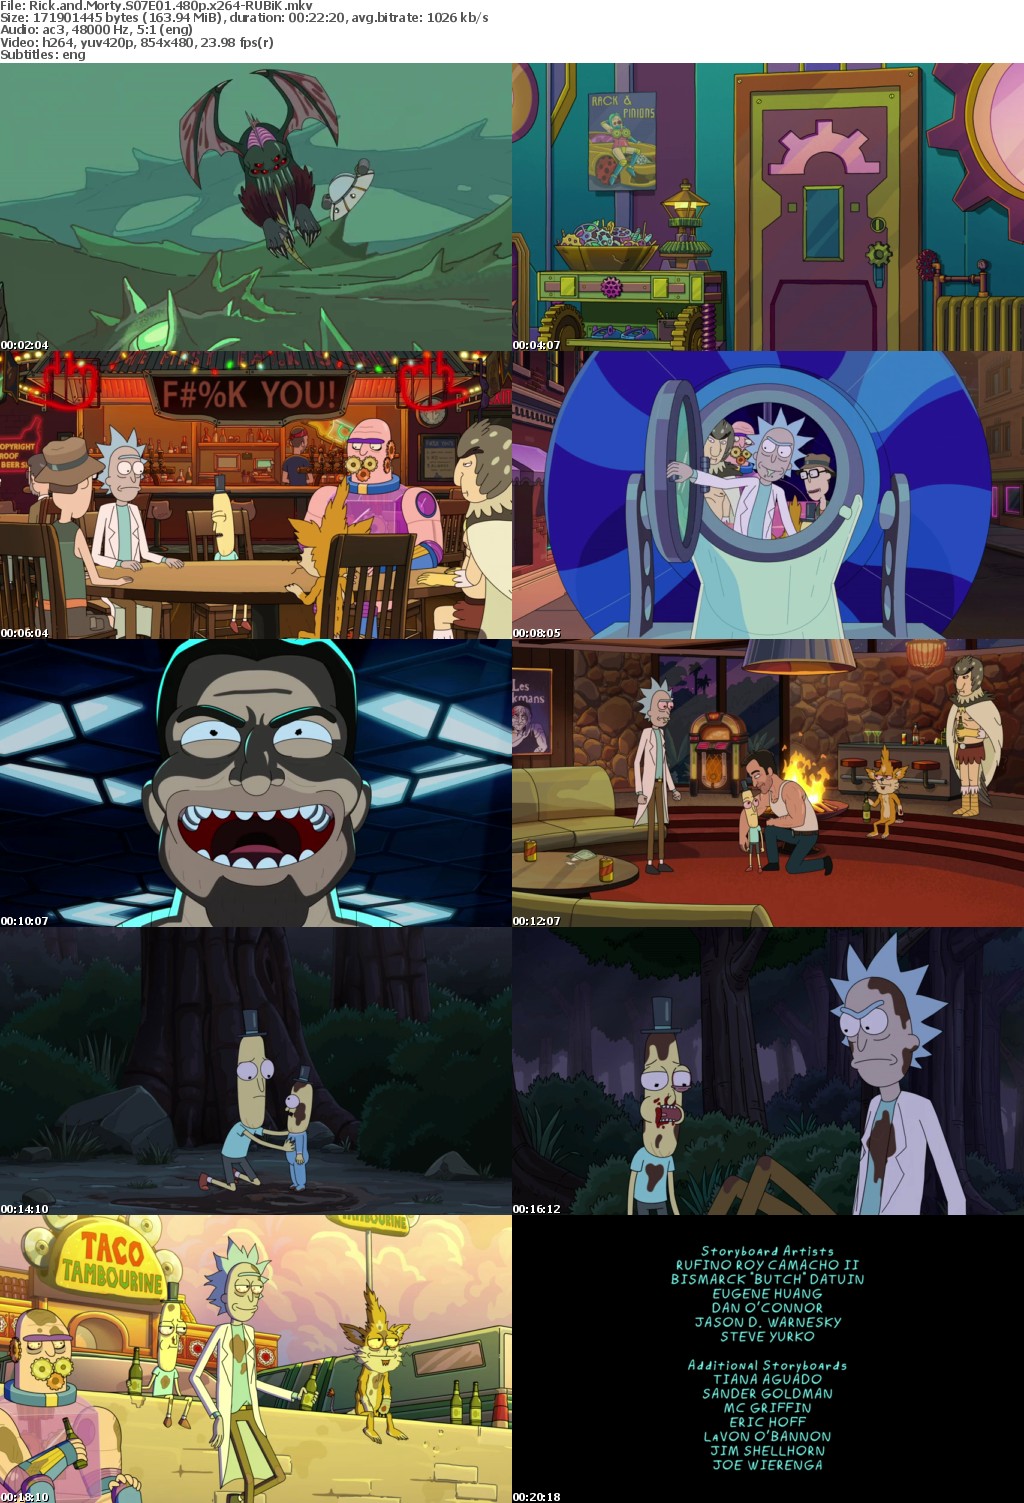 Rick and Morty S07E01 480p x264-RUBiK Saturn5